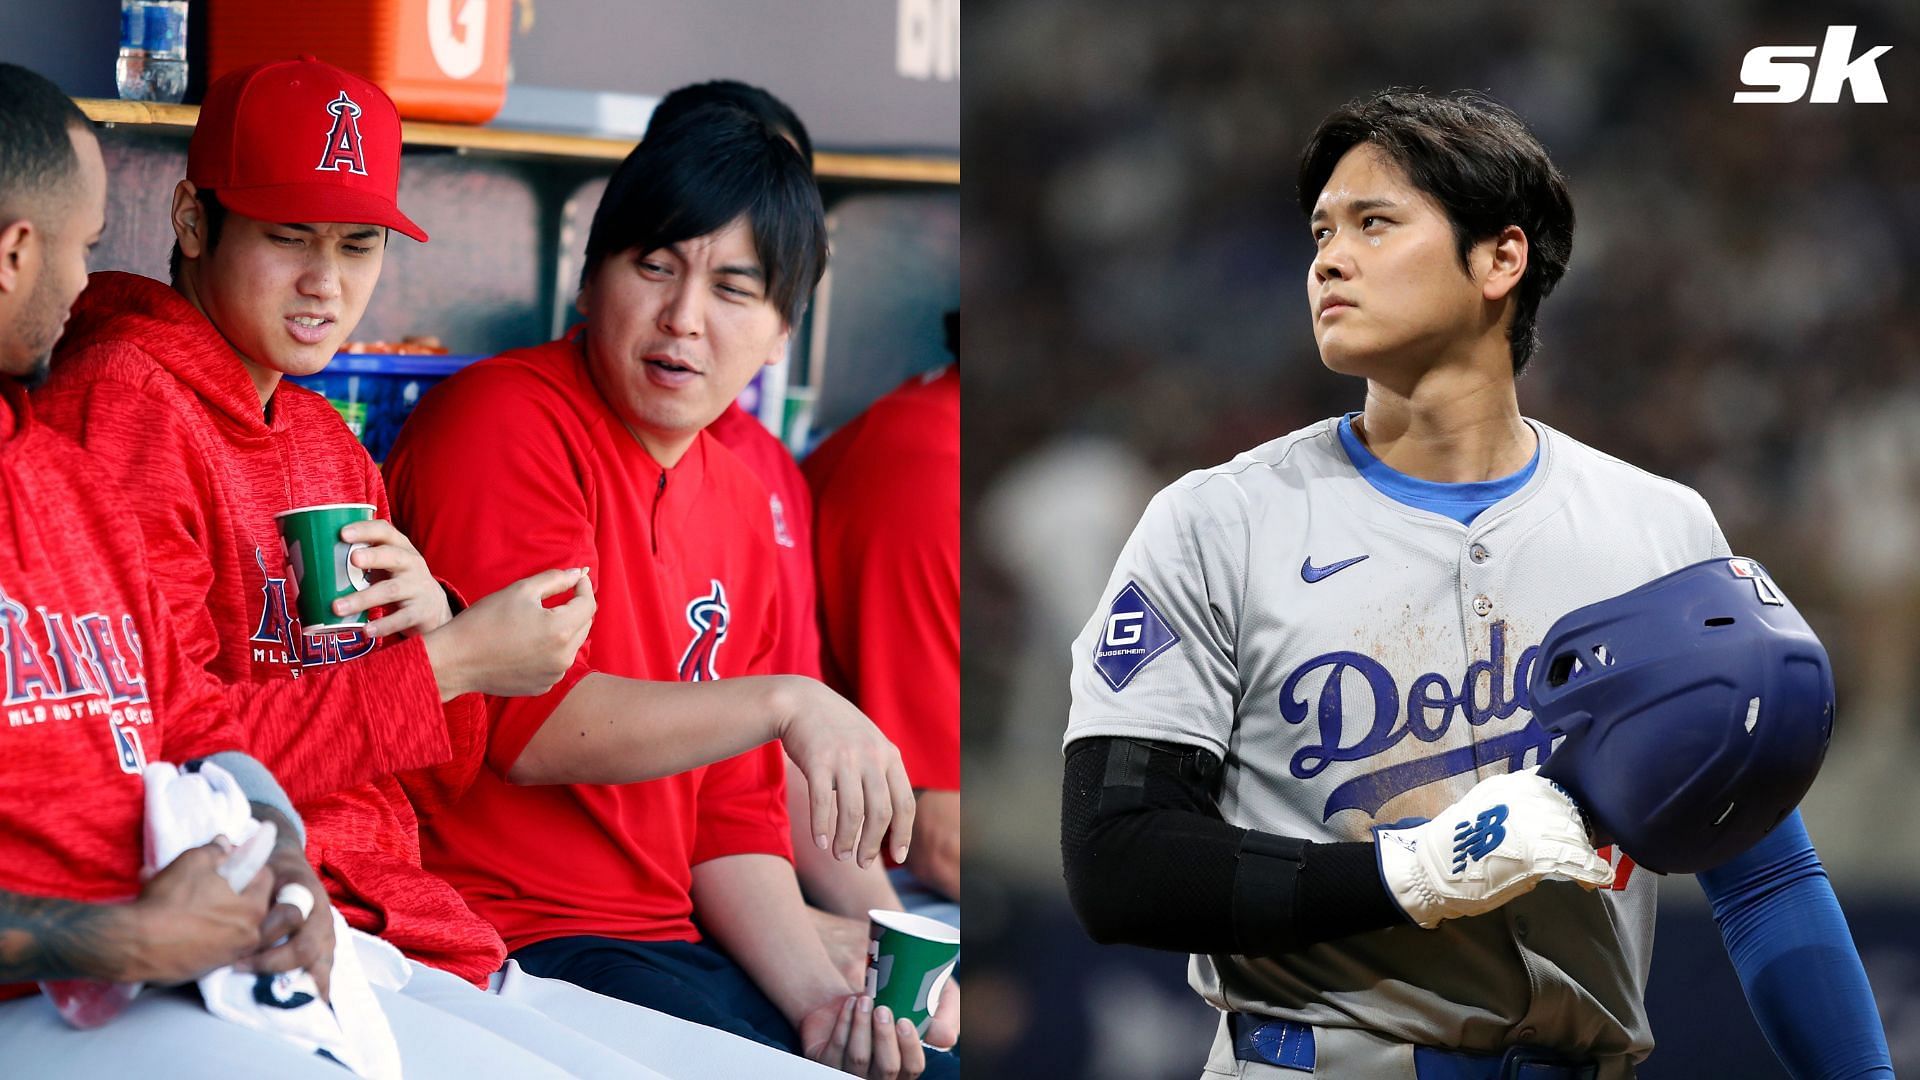 MLB fans cast doubt on claims regarding Shohei Ohtani